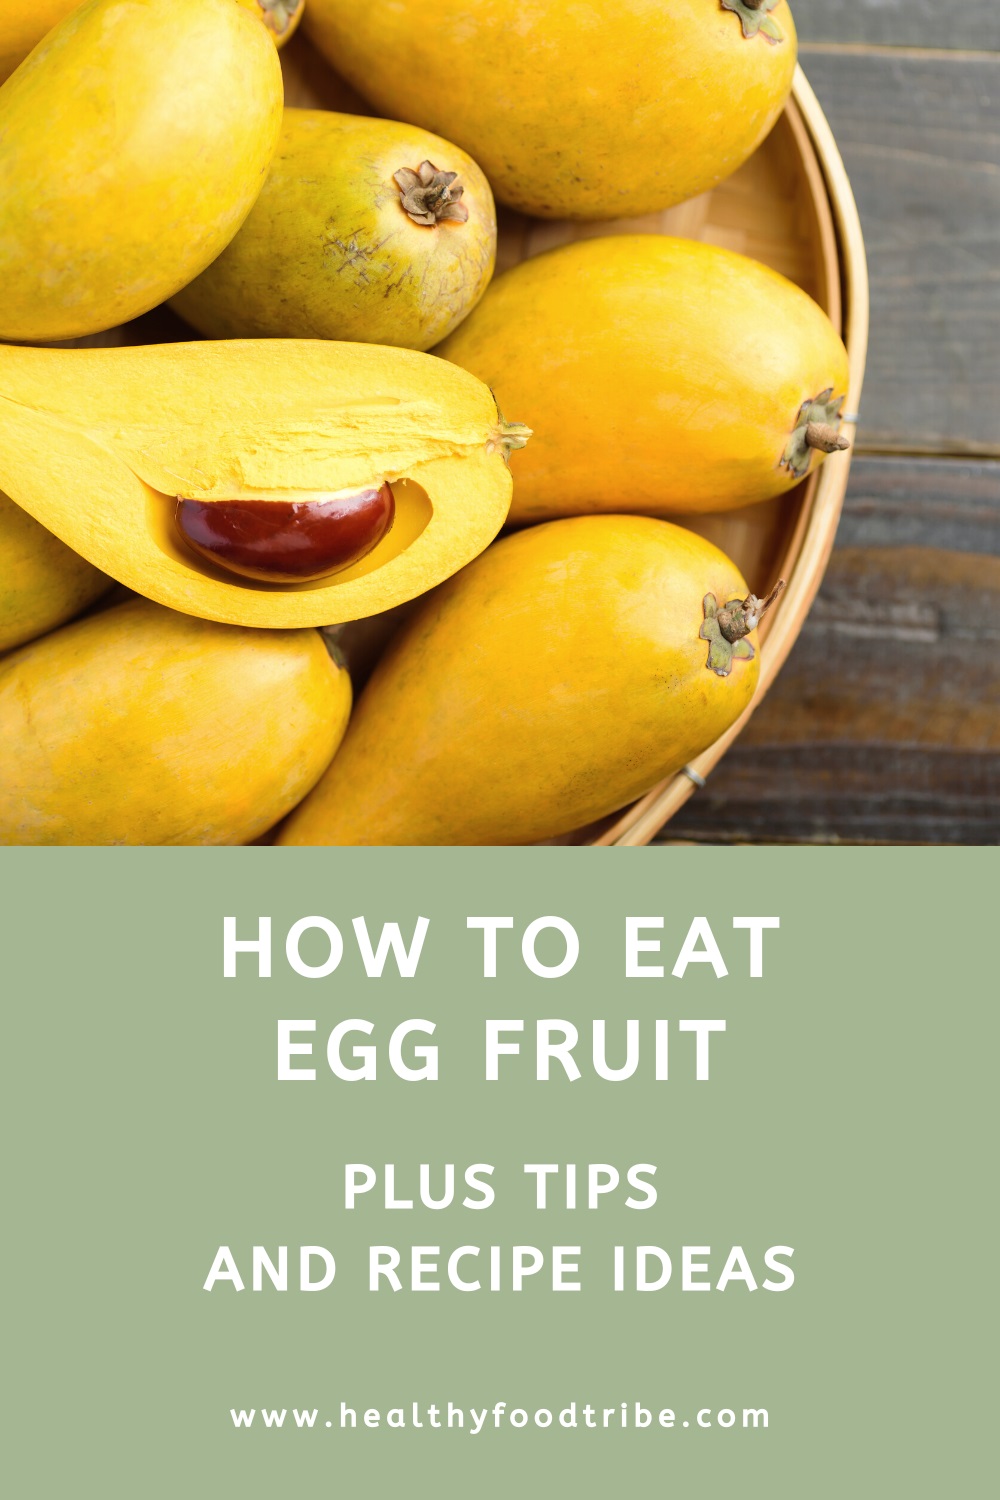 How to eat egg fruit (plus recipe ideas)